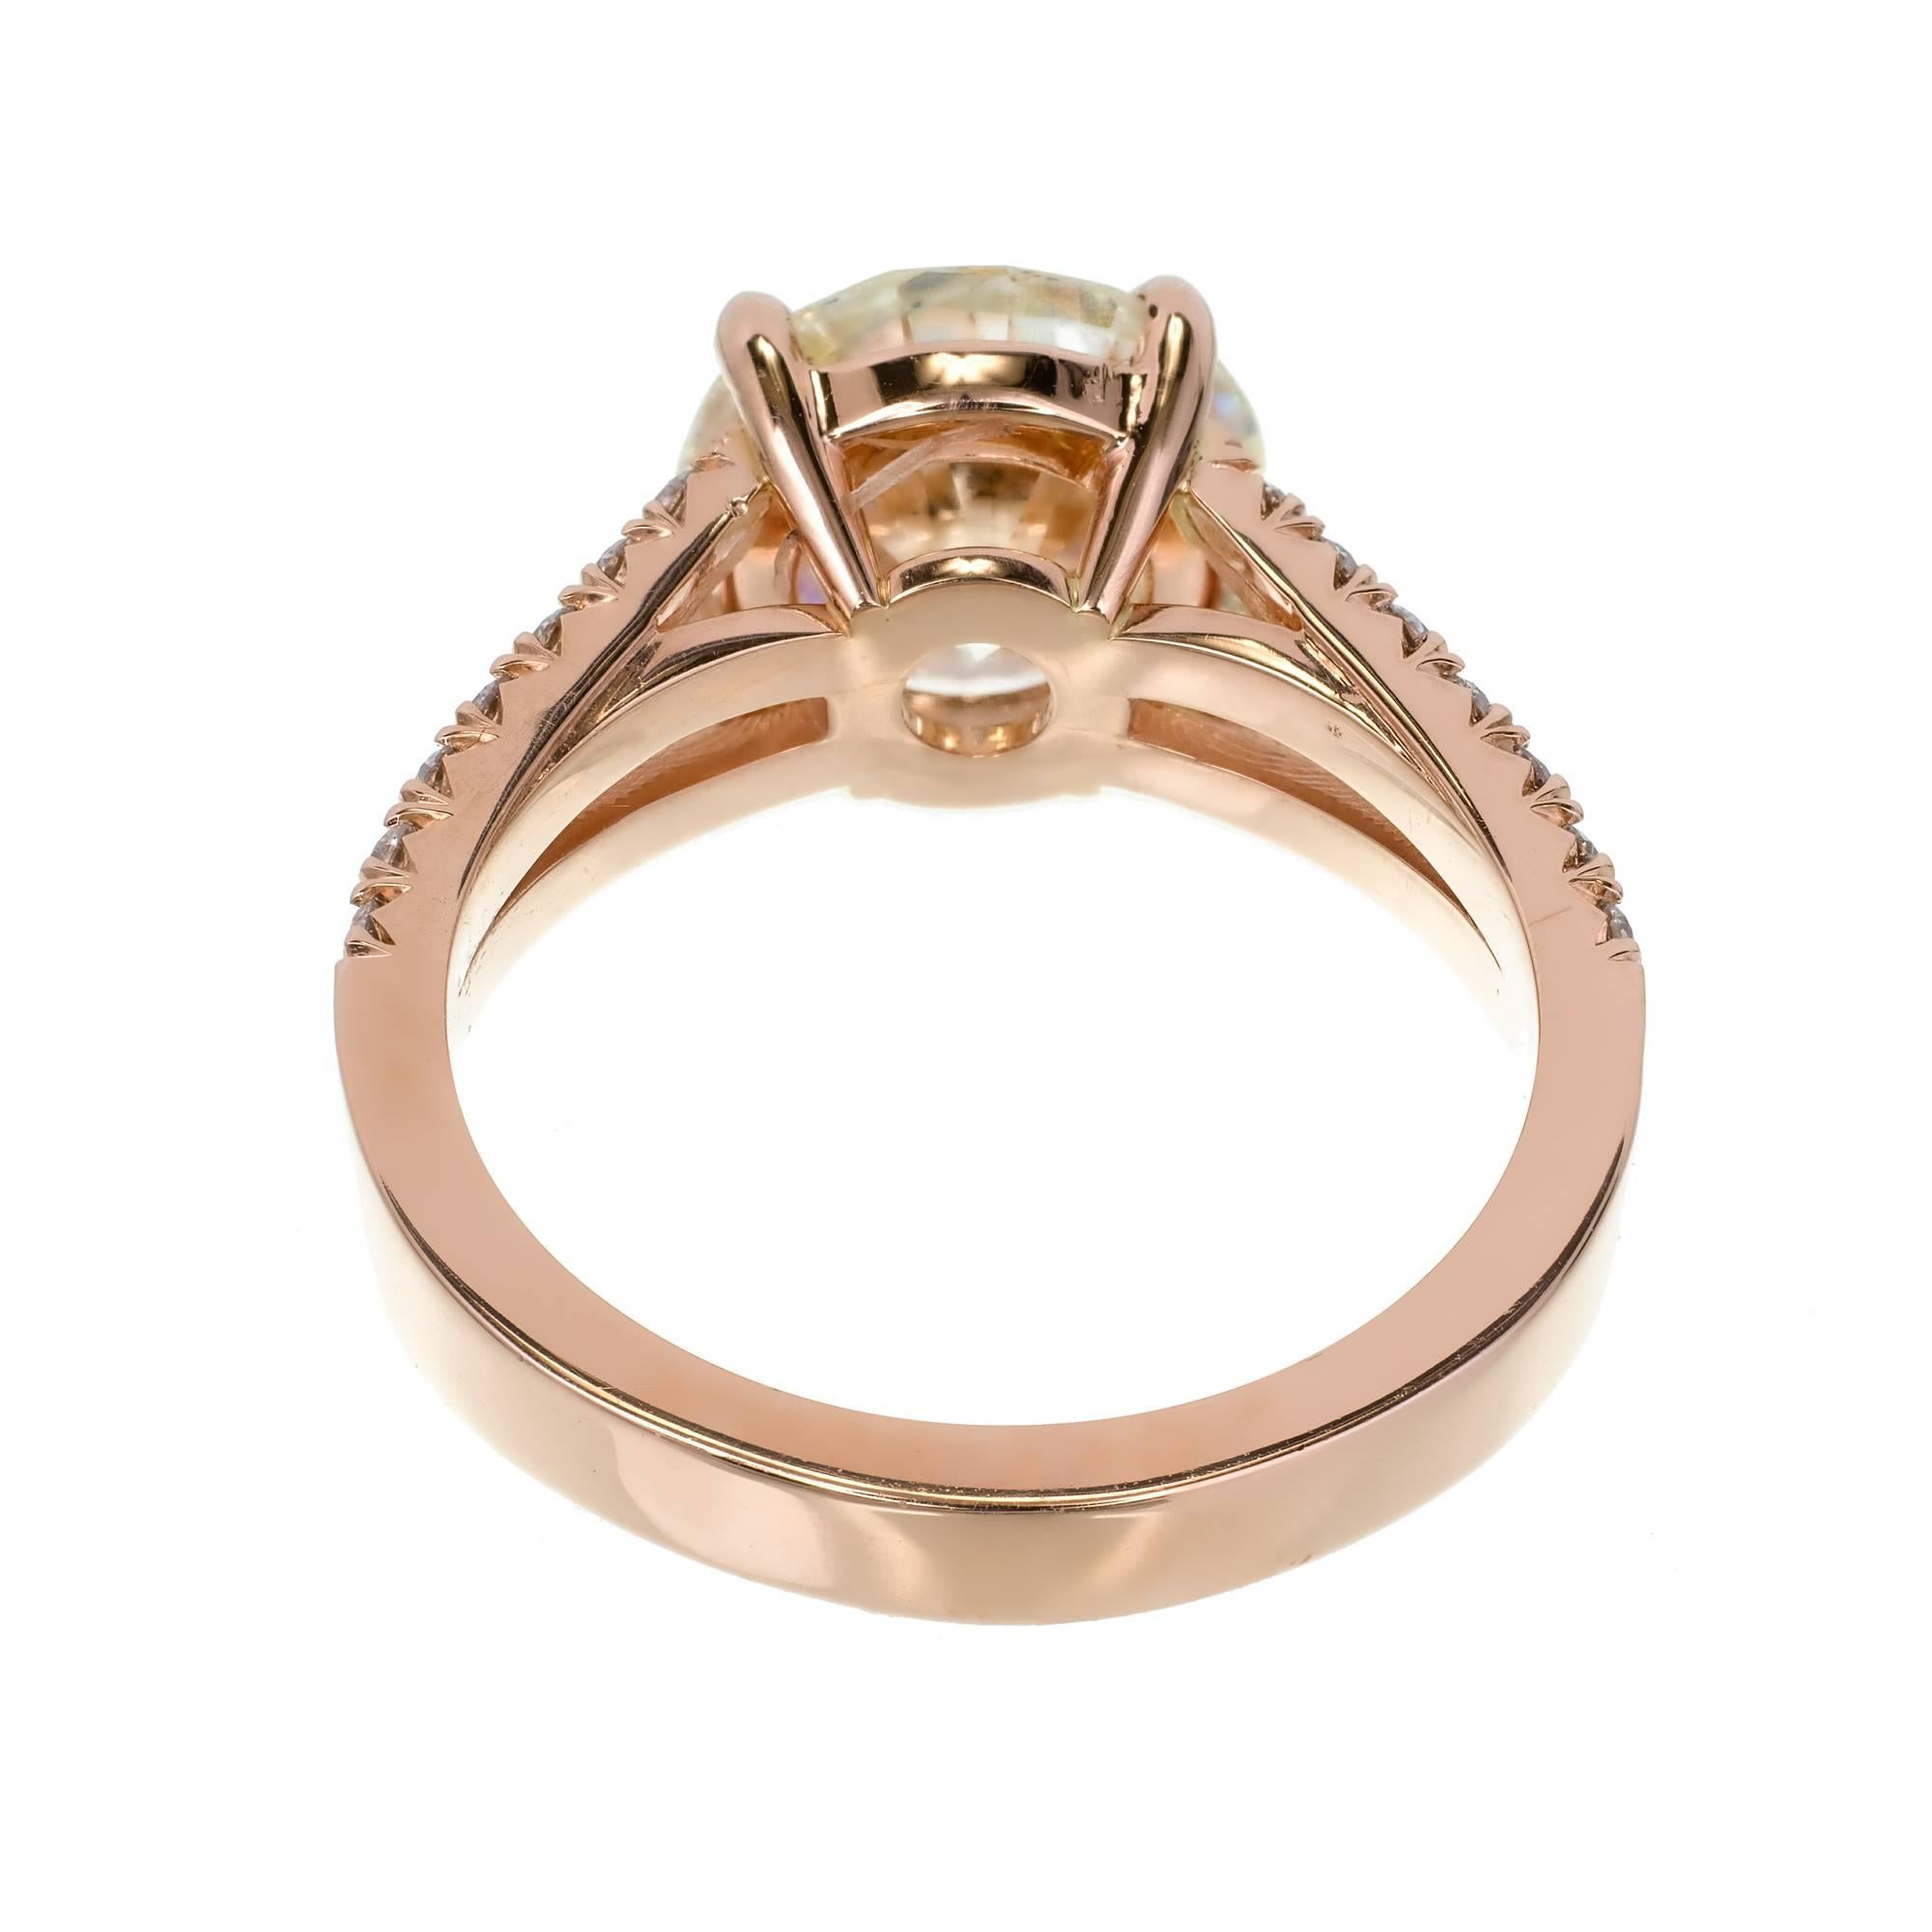 Peter Suchy GIA Certified 3.01 Carat Diamond Rose Gold Engagement Ring 4